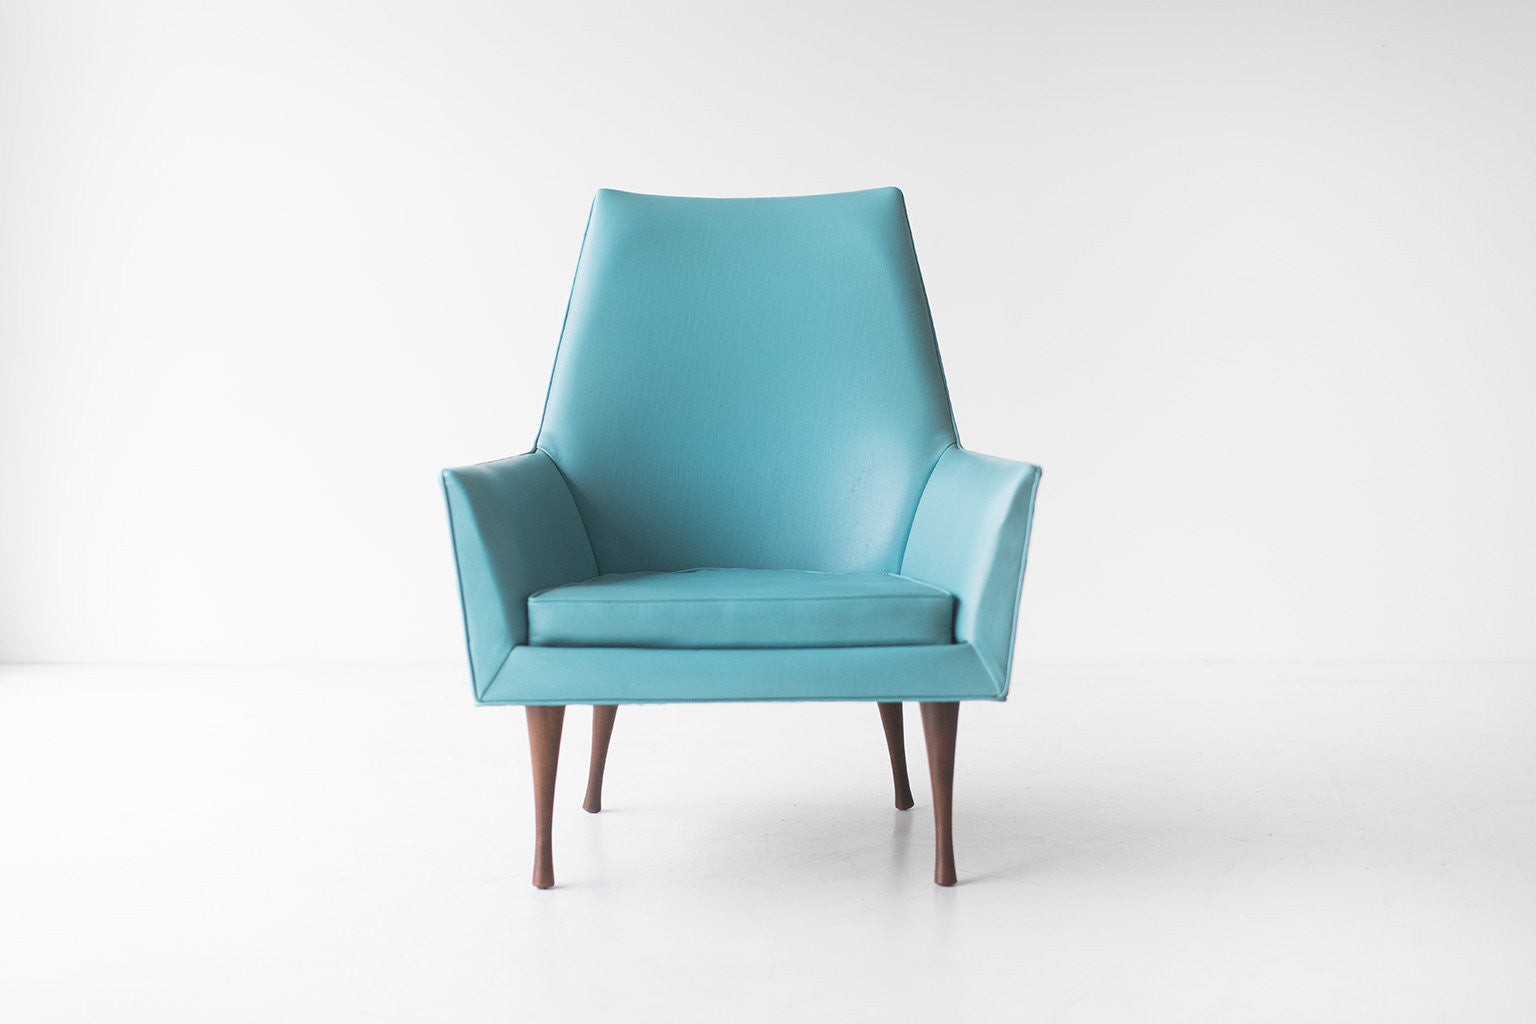 Paul McCobb Lounge Chair for Widdicomb: Symmetric Group - 01301703